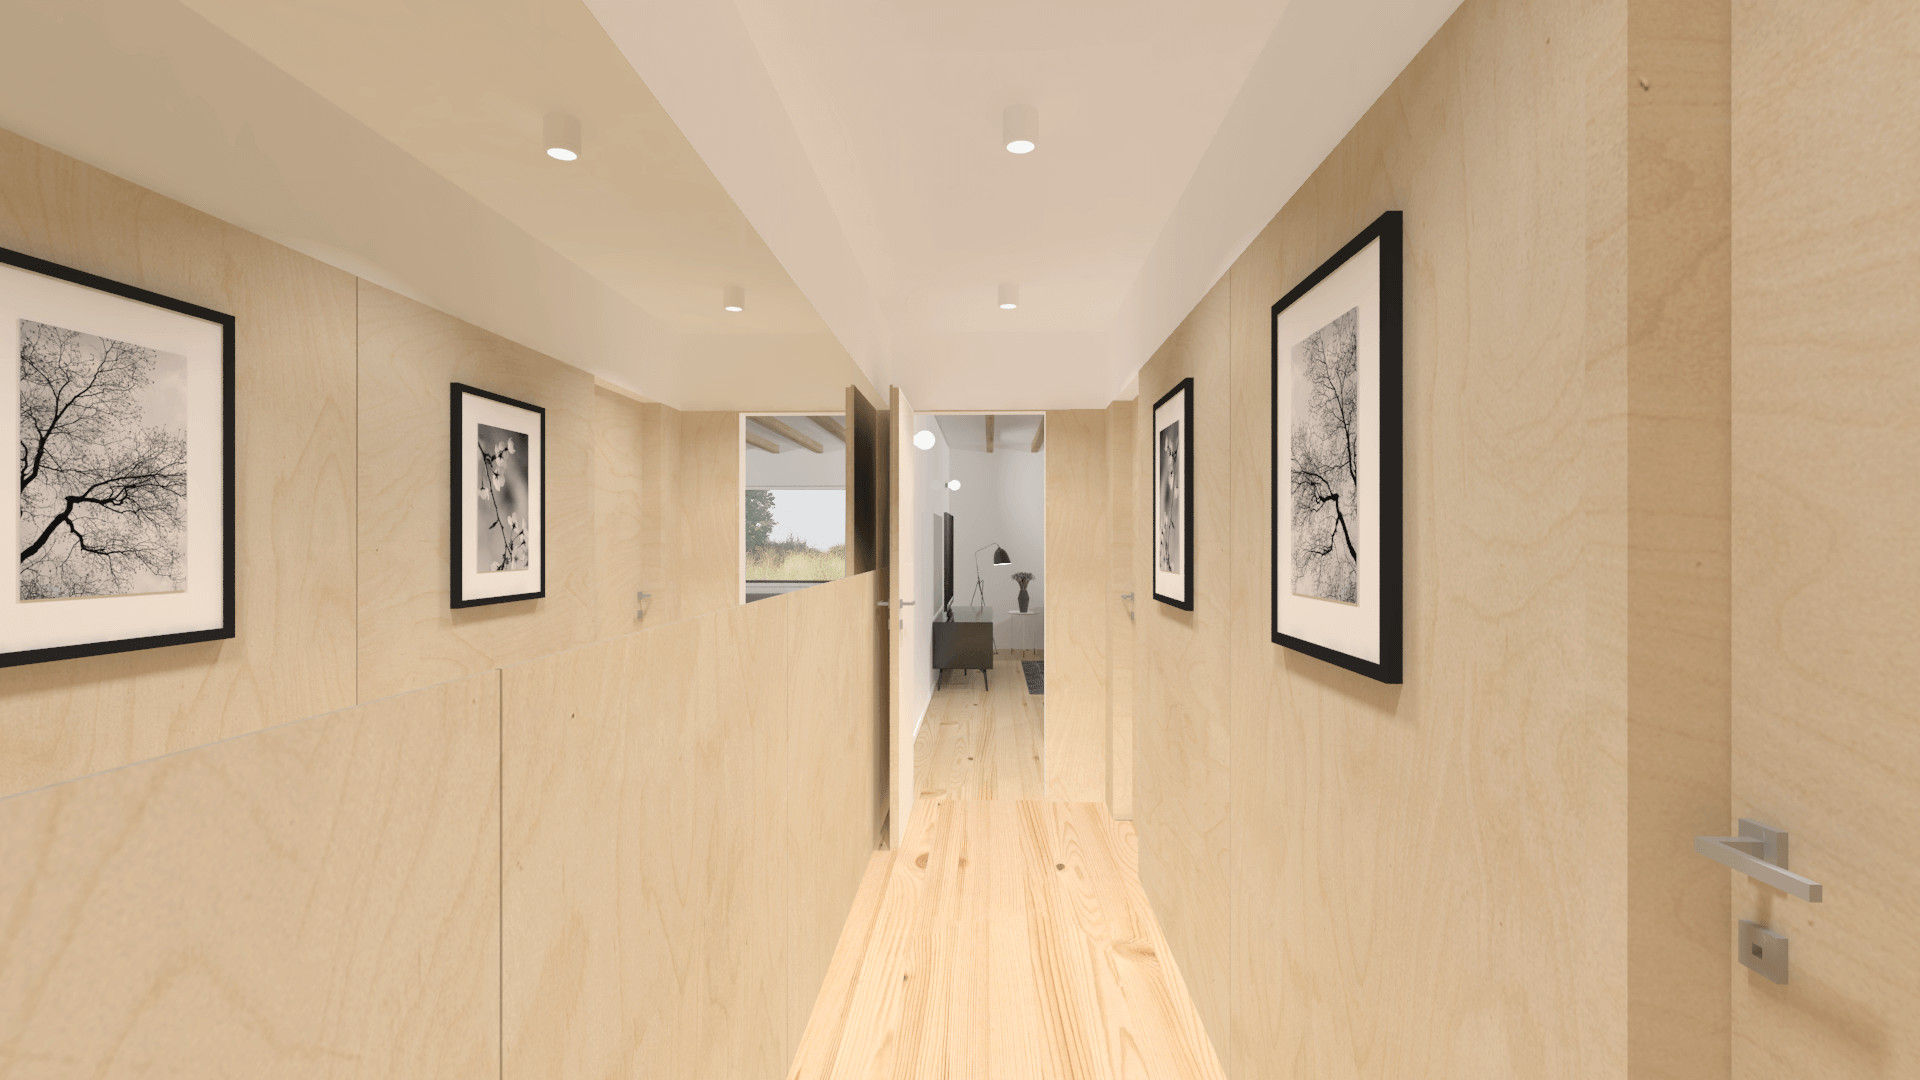 Casa modular, Estúdio AMATAM Estúdio AMATAM Modern corridor, hallway & stairs Wood Wood effect